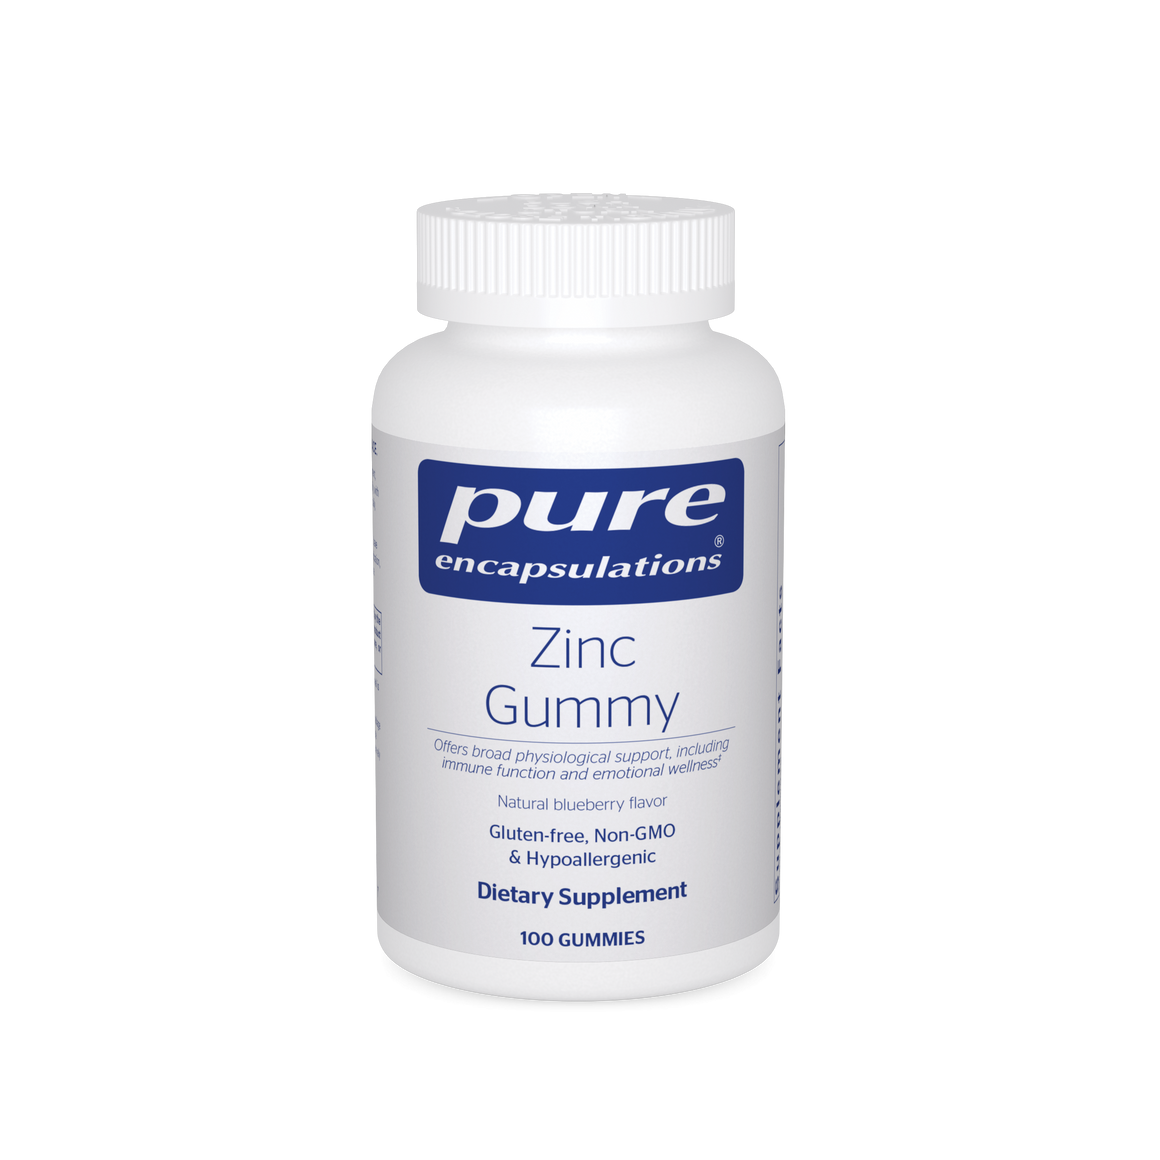 Zinc Gummy - Pure Encapsulations - 100 gummies